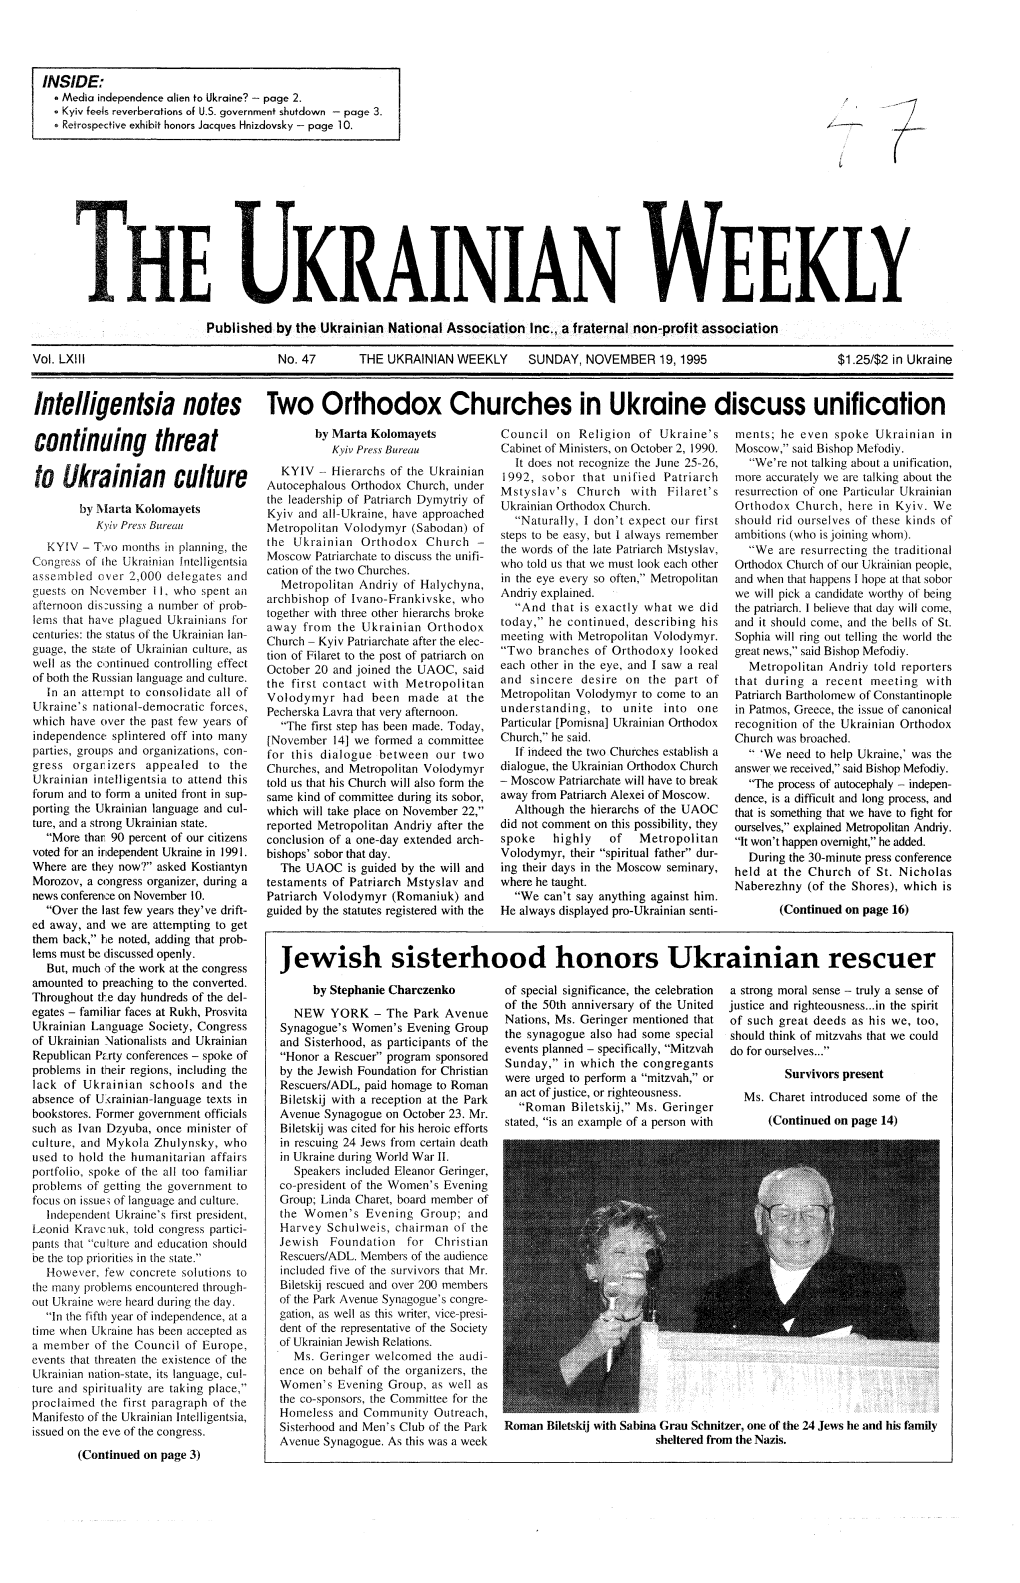 The Ukrainian Weekly 1995, No.47